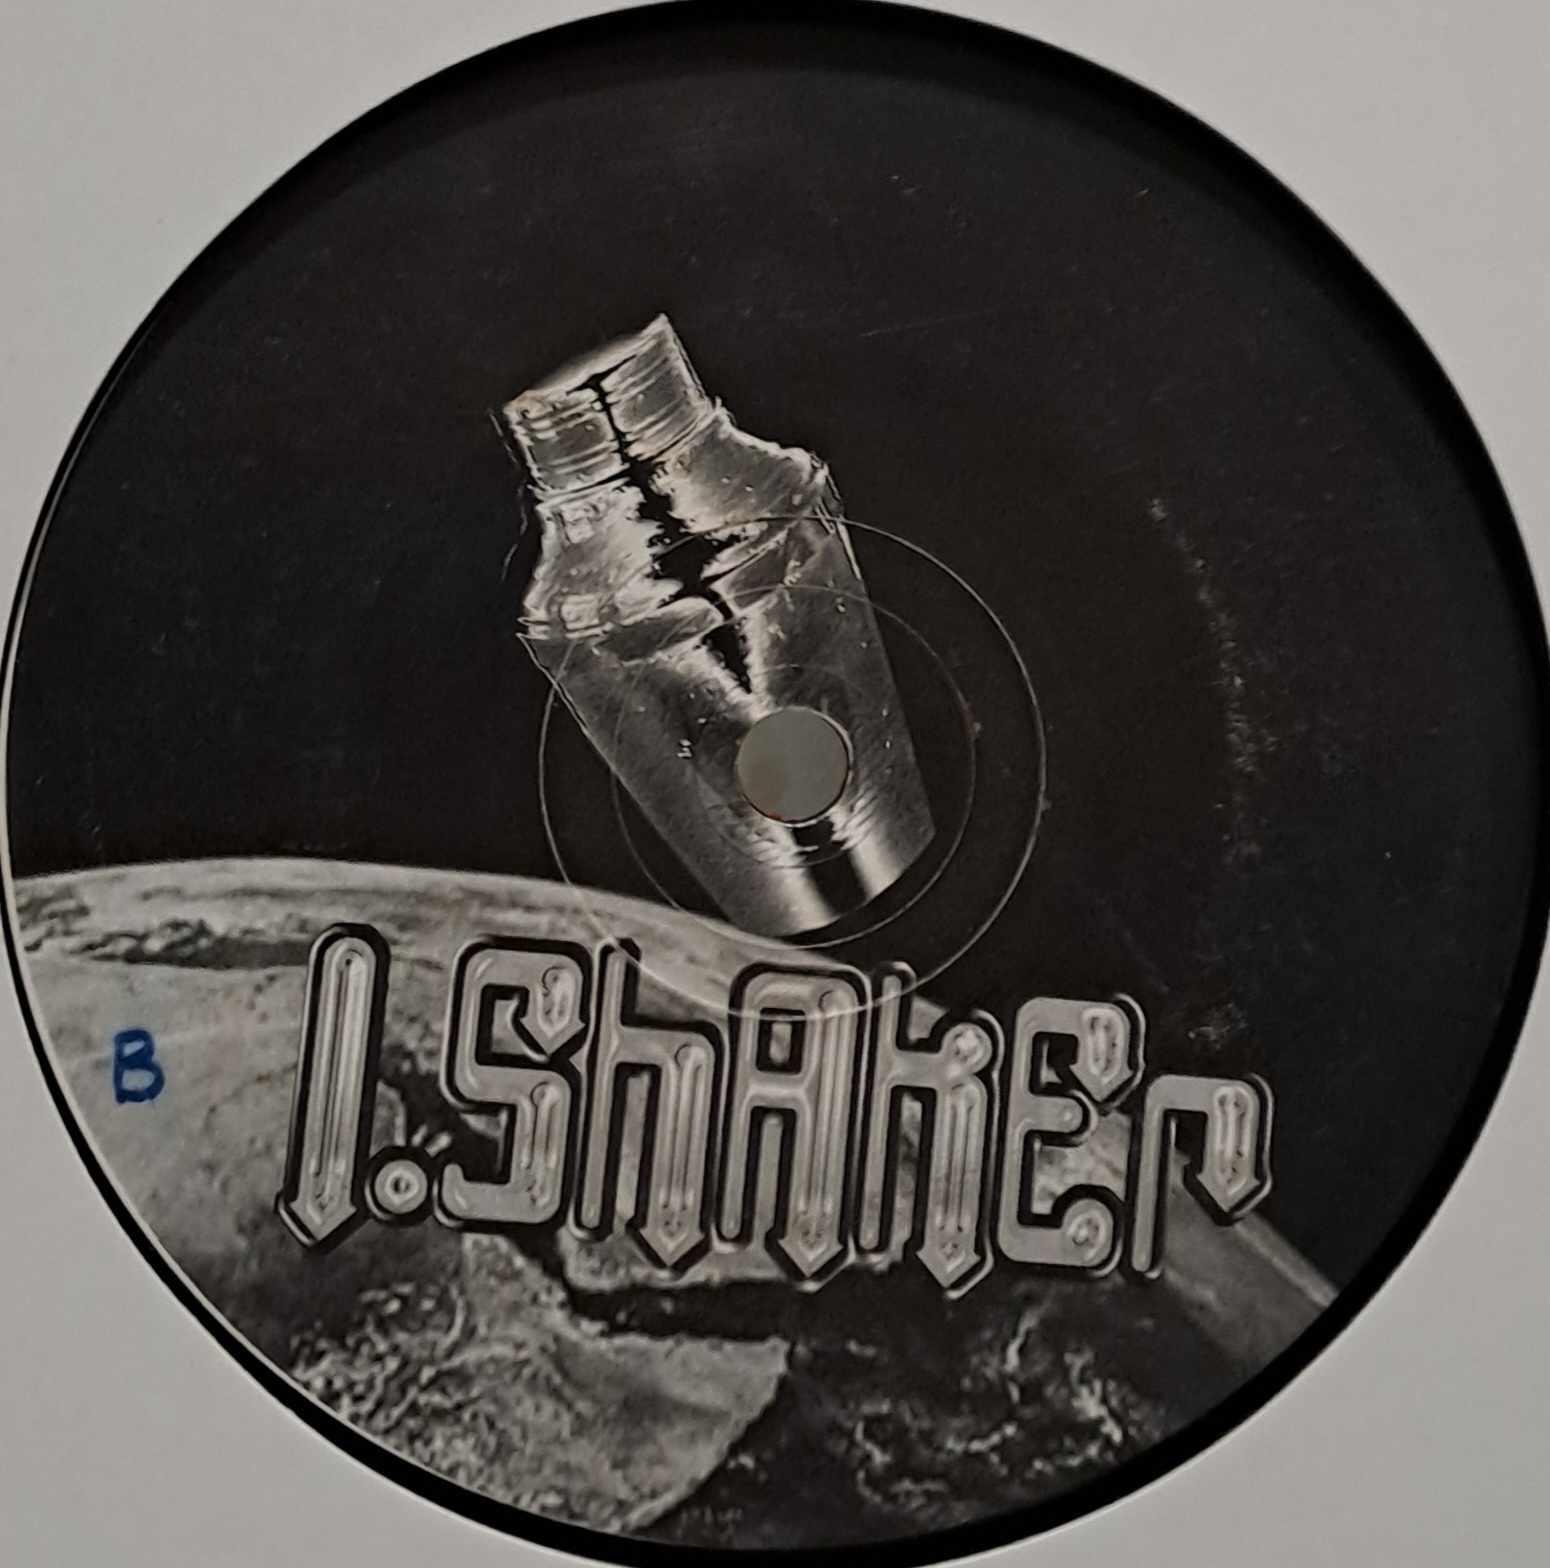 I.Shaker - vinyle techno